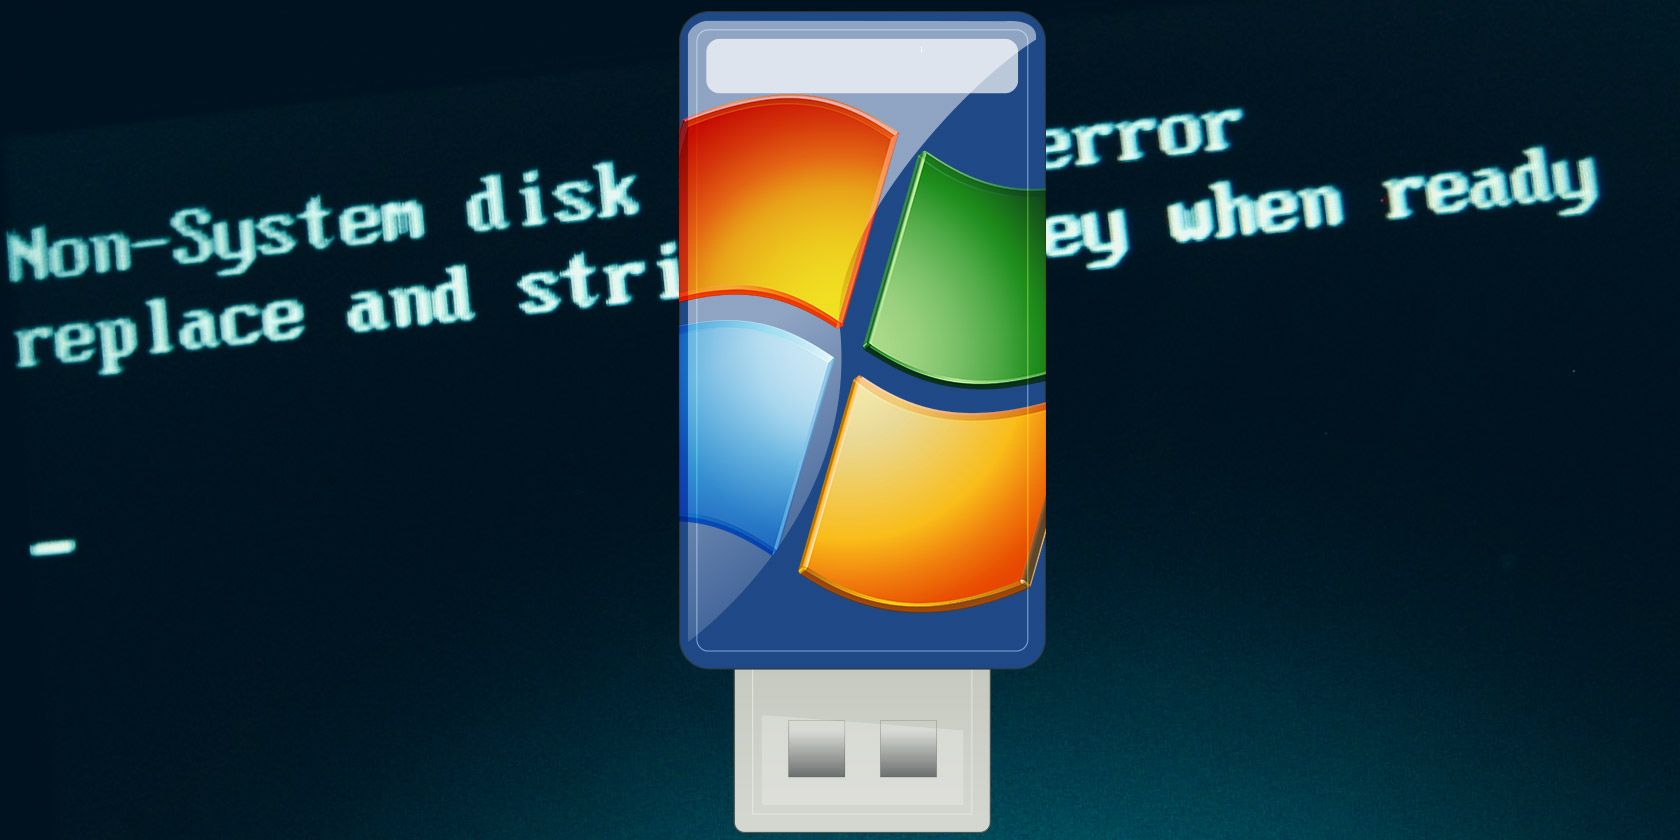 how to backup computer to flash drive wondows 10